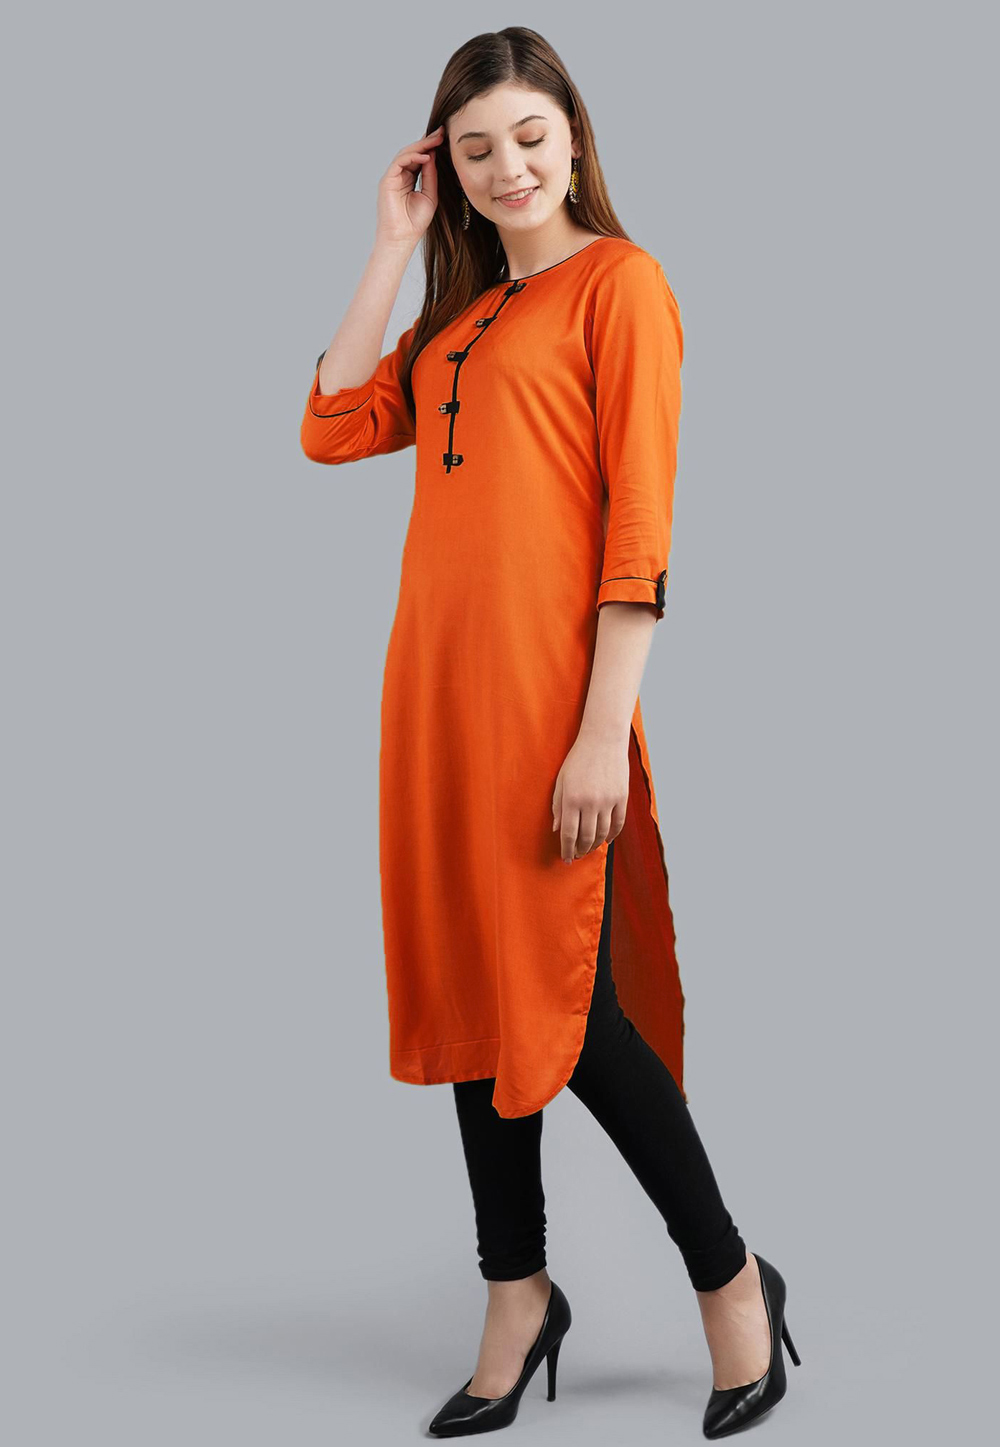 Reveal 165+ orange leggings combination kurti best